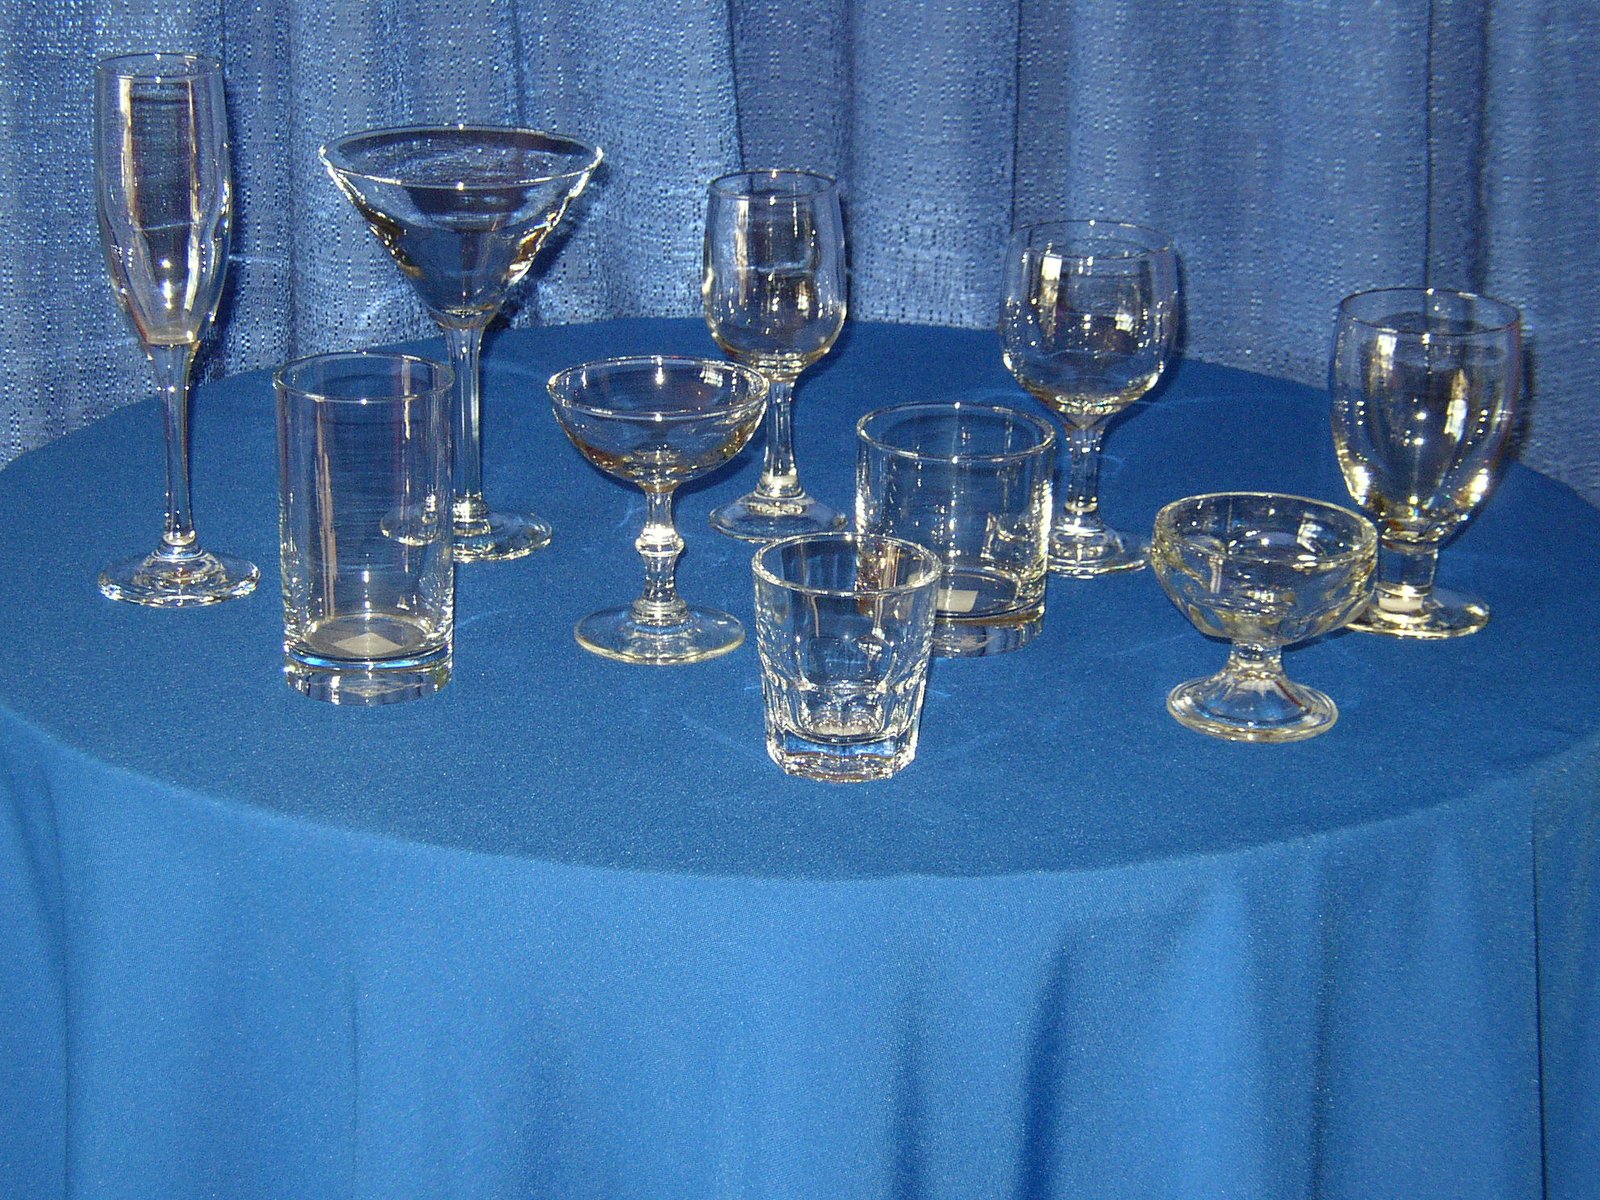 Rental Stemware & Glassware for your Event